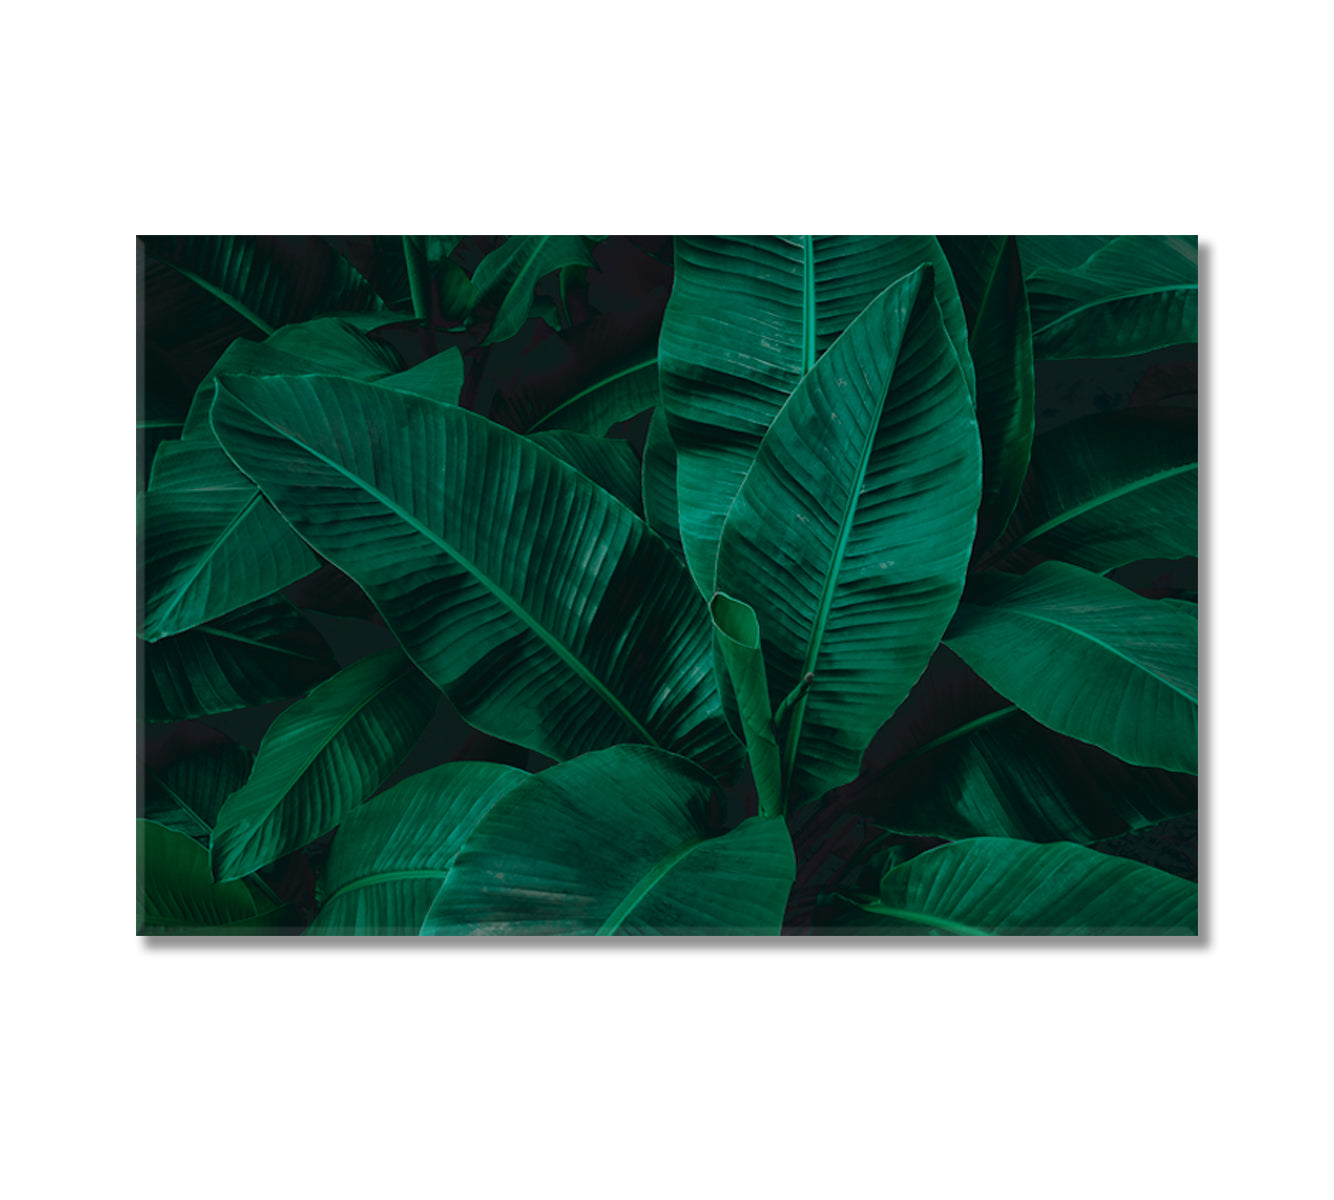 Abstract Tropical Banana Leaf Canvas Print-Canvas Print-CetArt-1 Panel-24x16 inches-CetArt